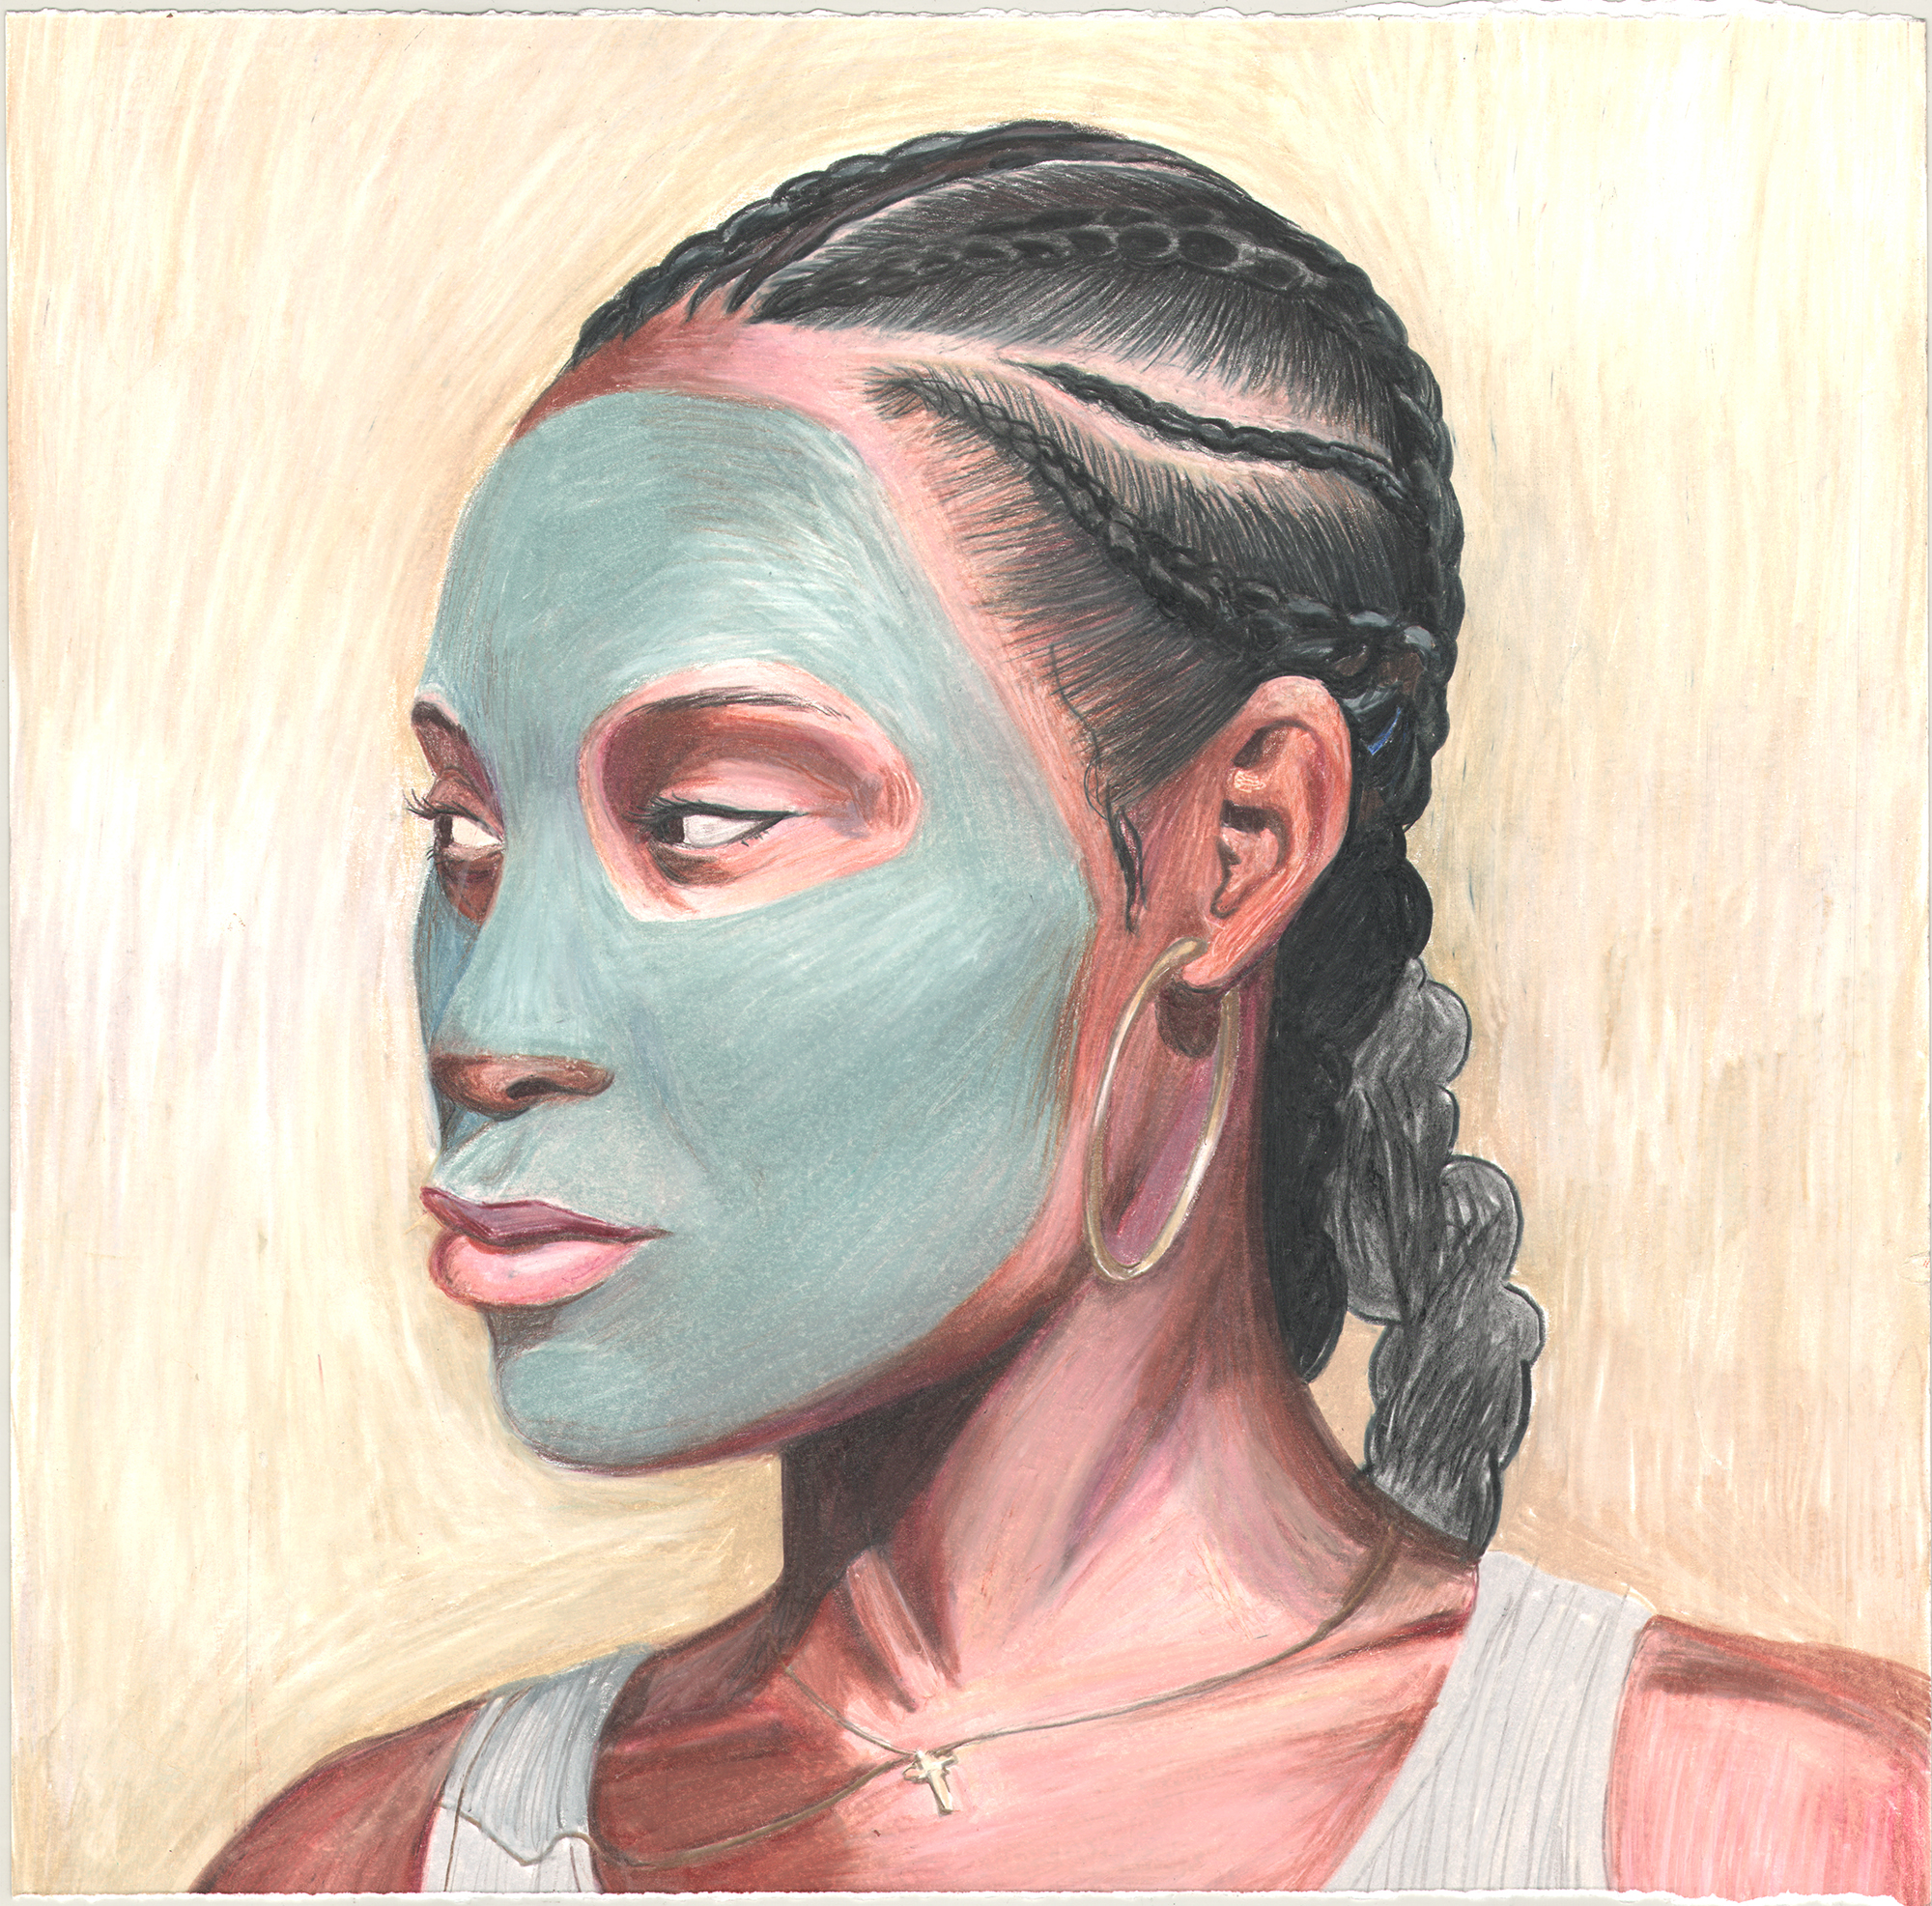 Jordan (Facemask) - 12" x 9" - Colored Pencil on Paper - 2017